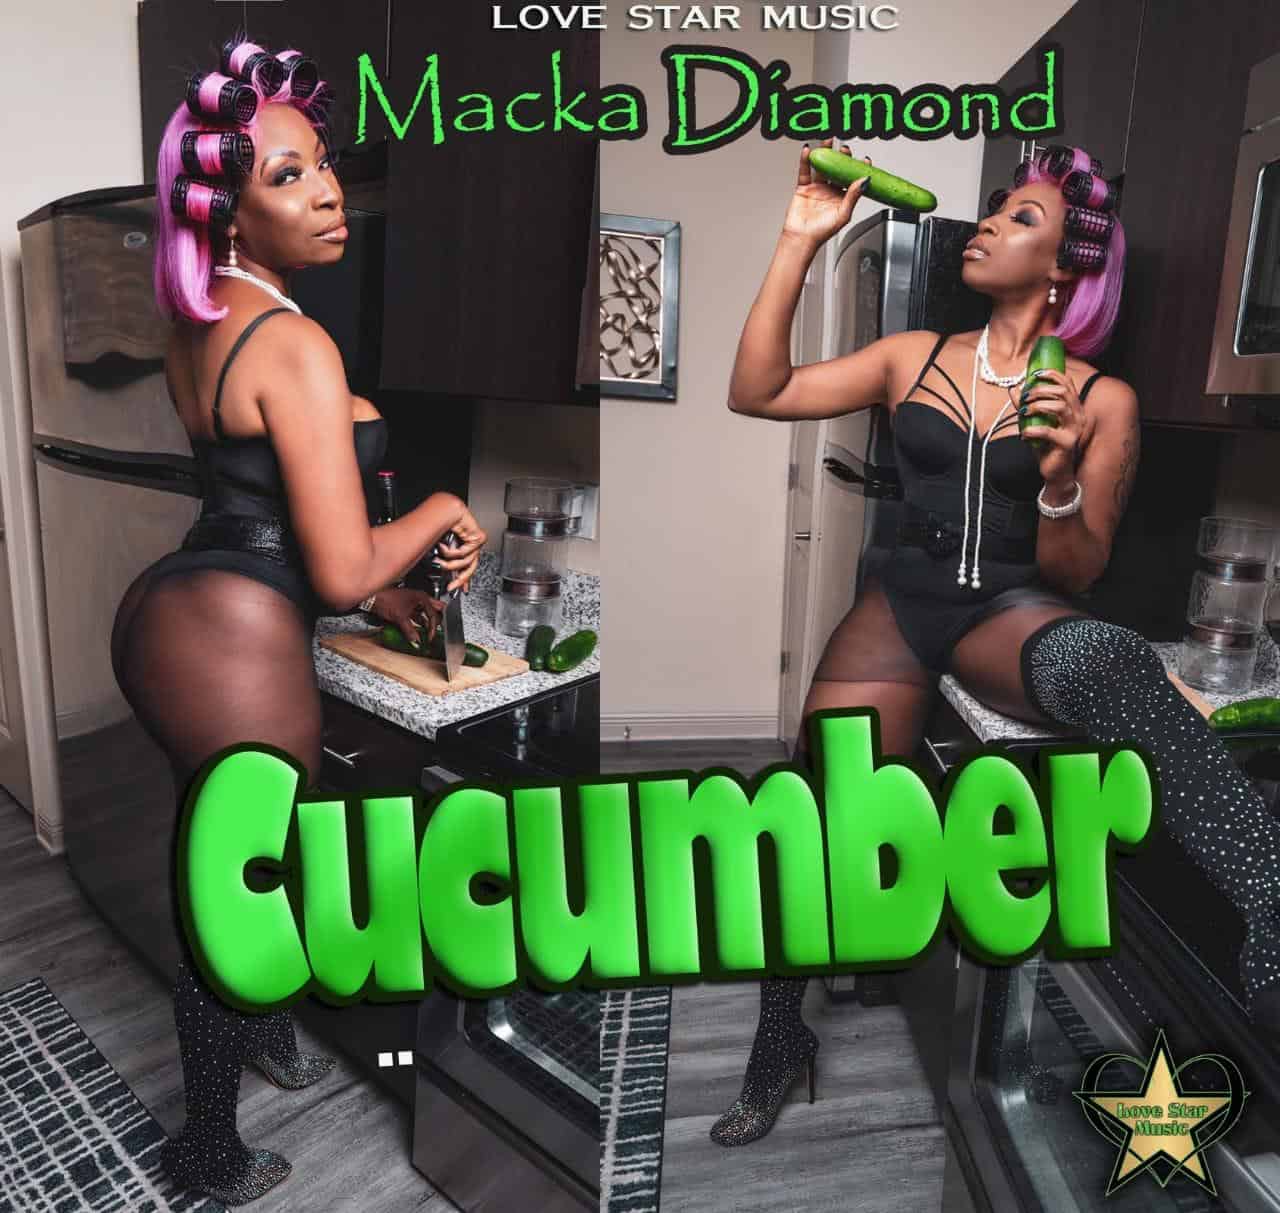 Macka Diamond - Cucumber - Love Star Music